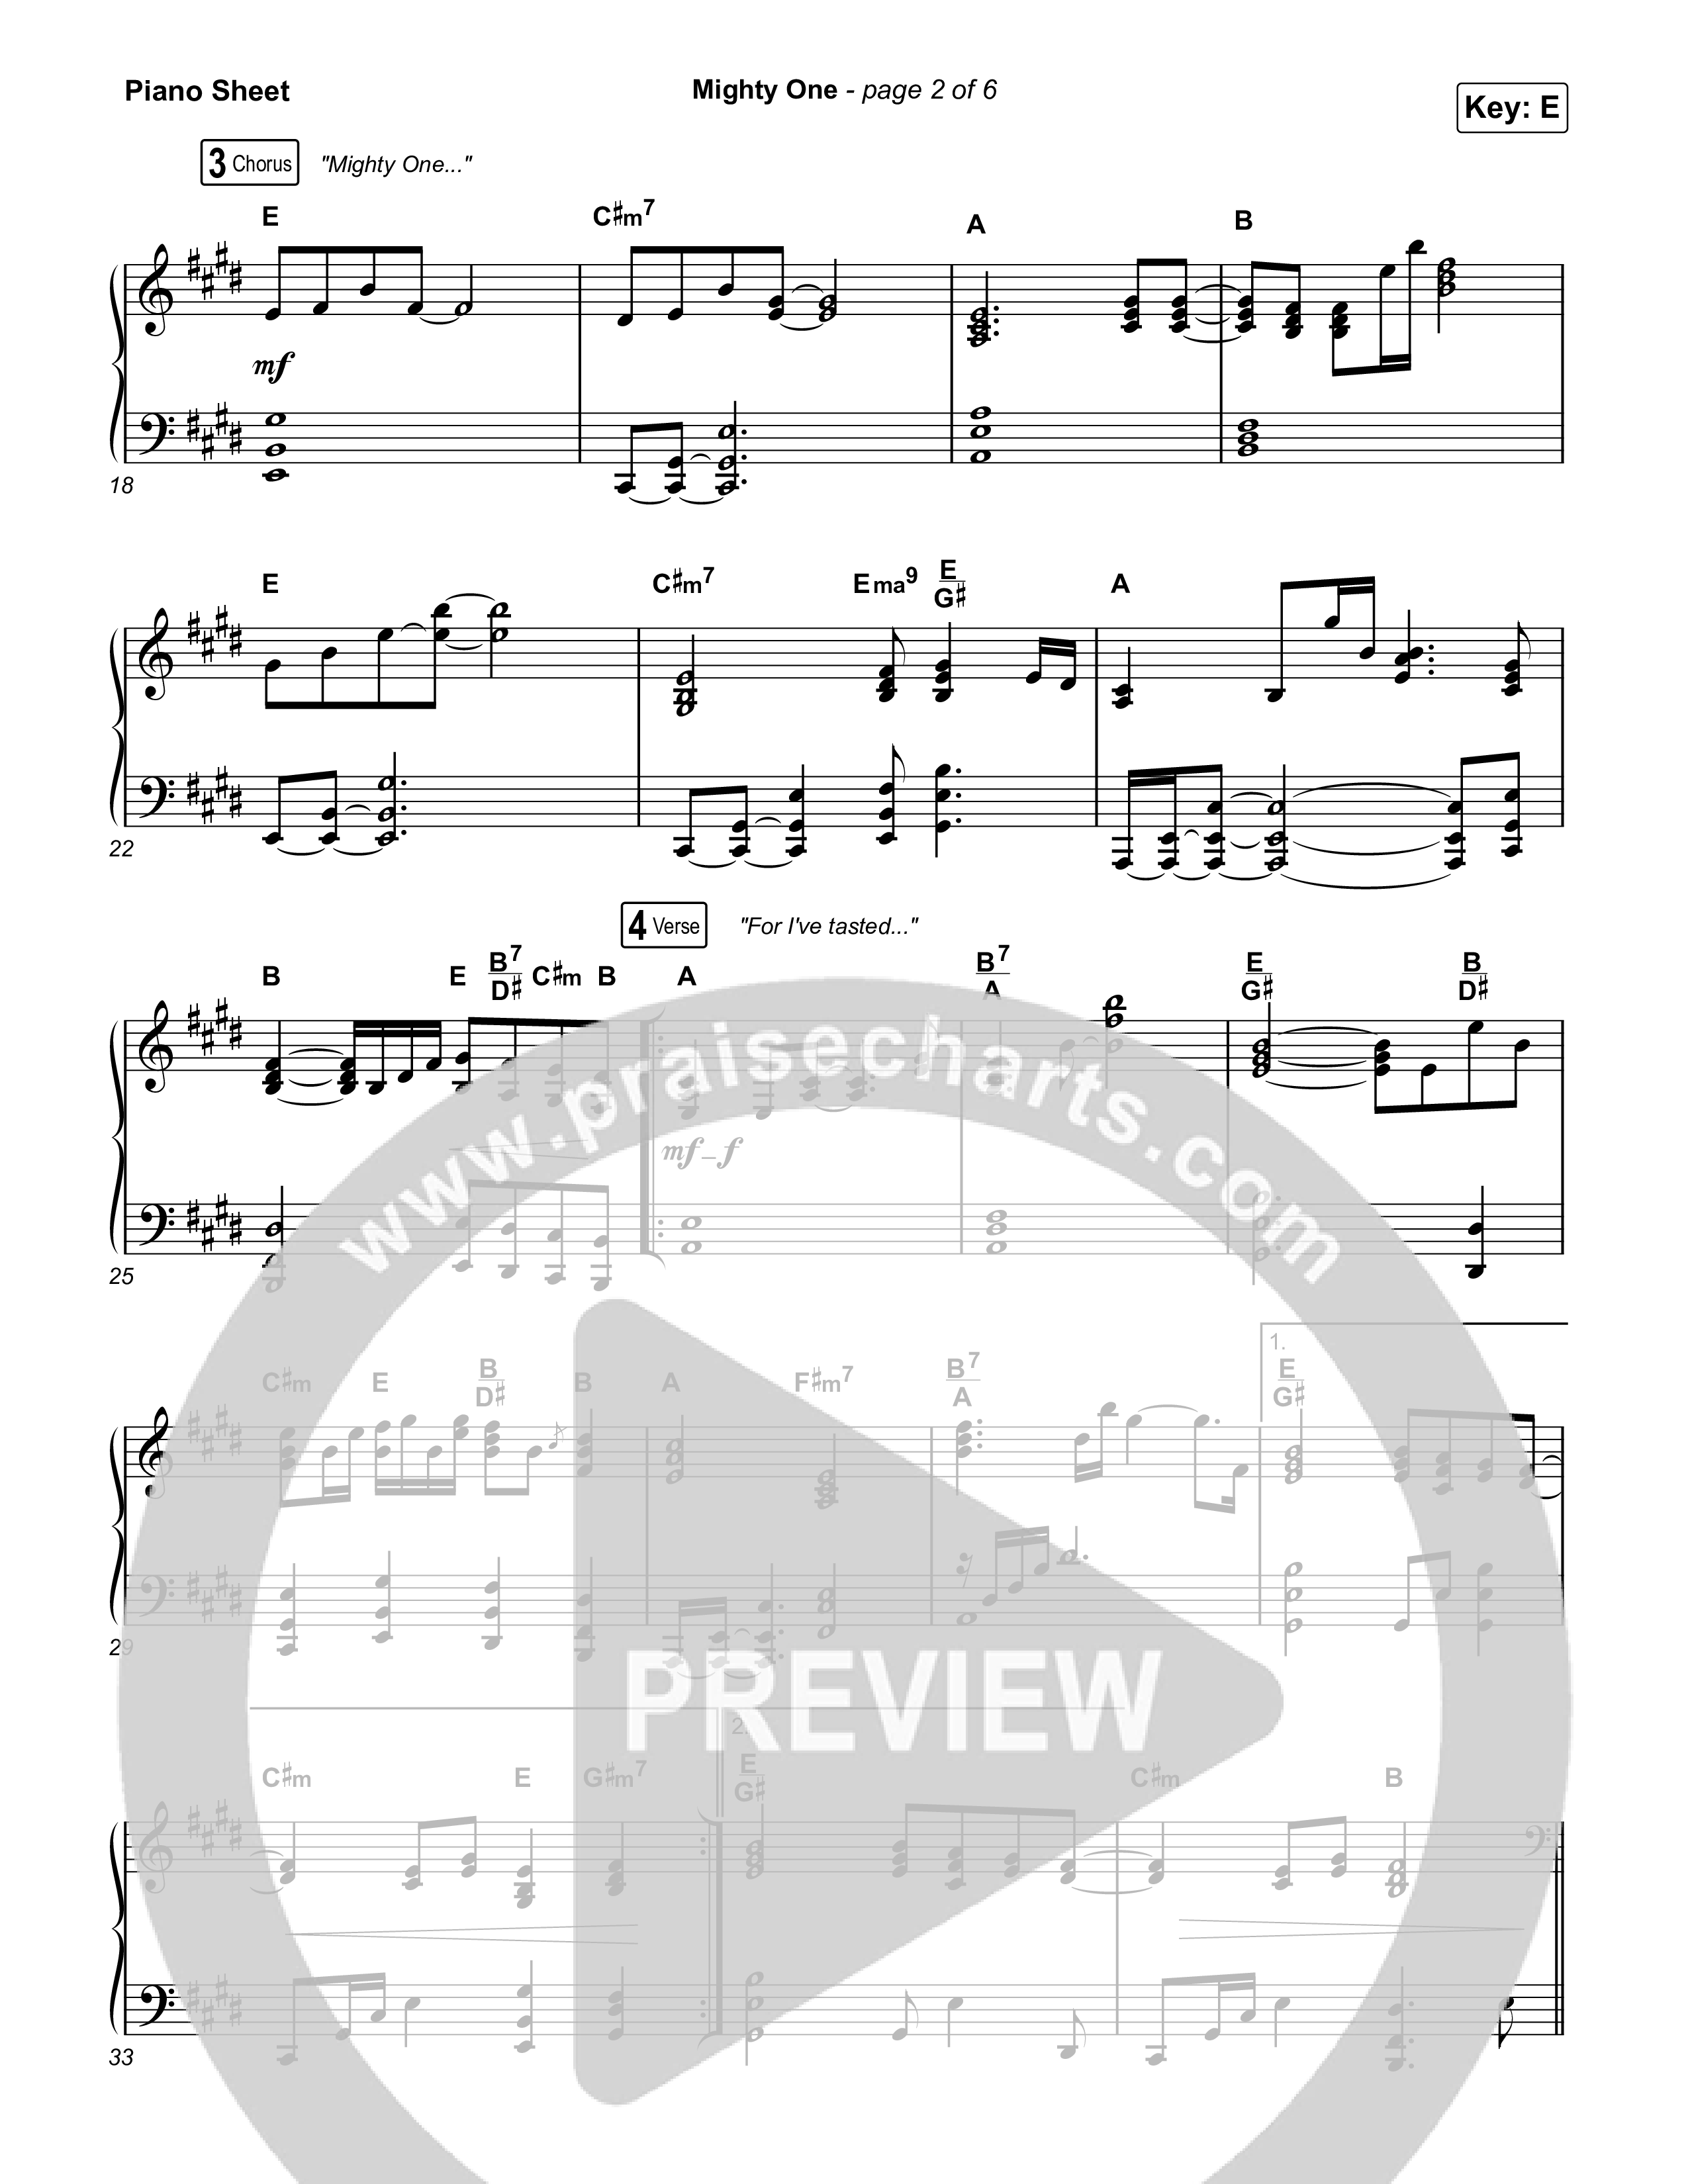 Mighty One Piano Sheet (Maverick City Music / Maryanne J. George / Todd Dulaney)